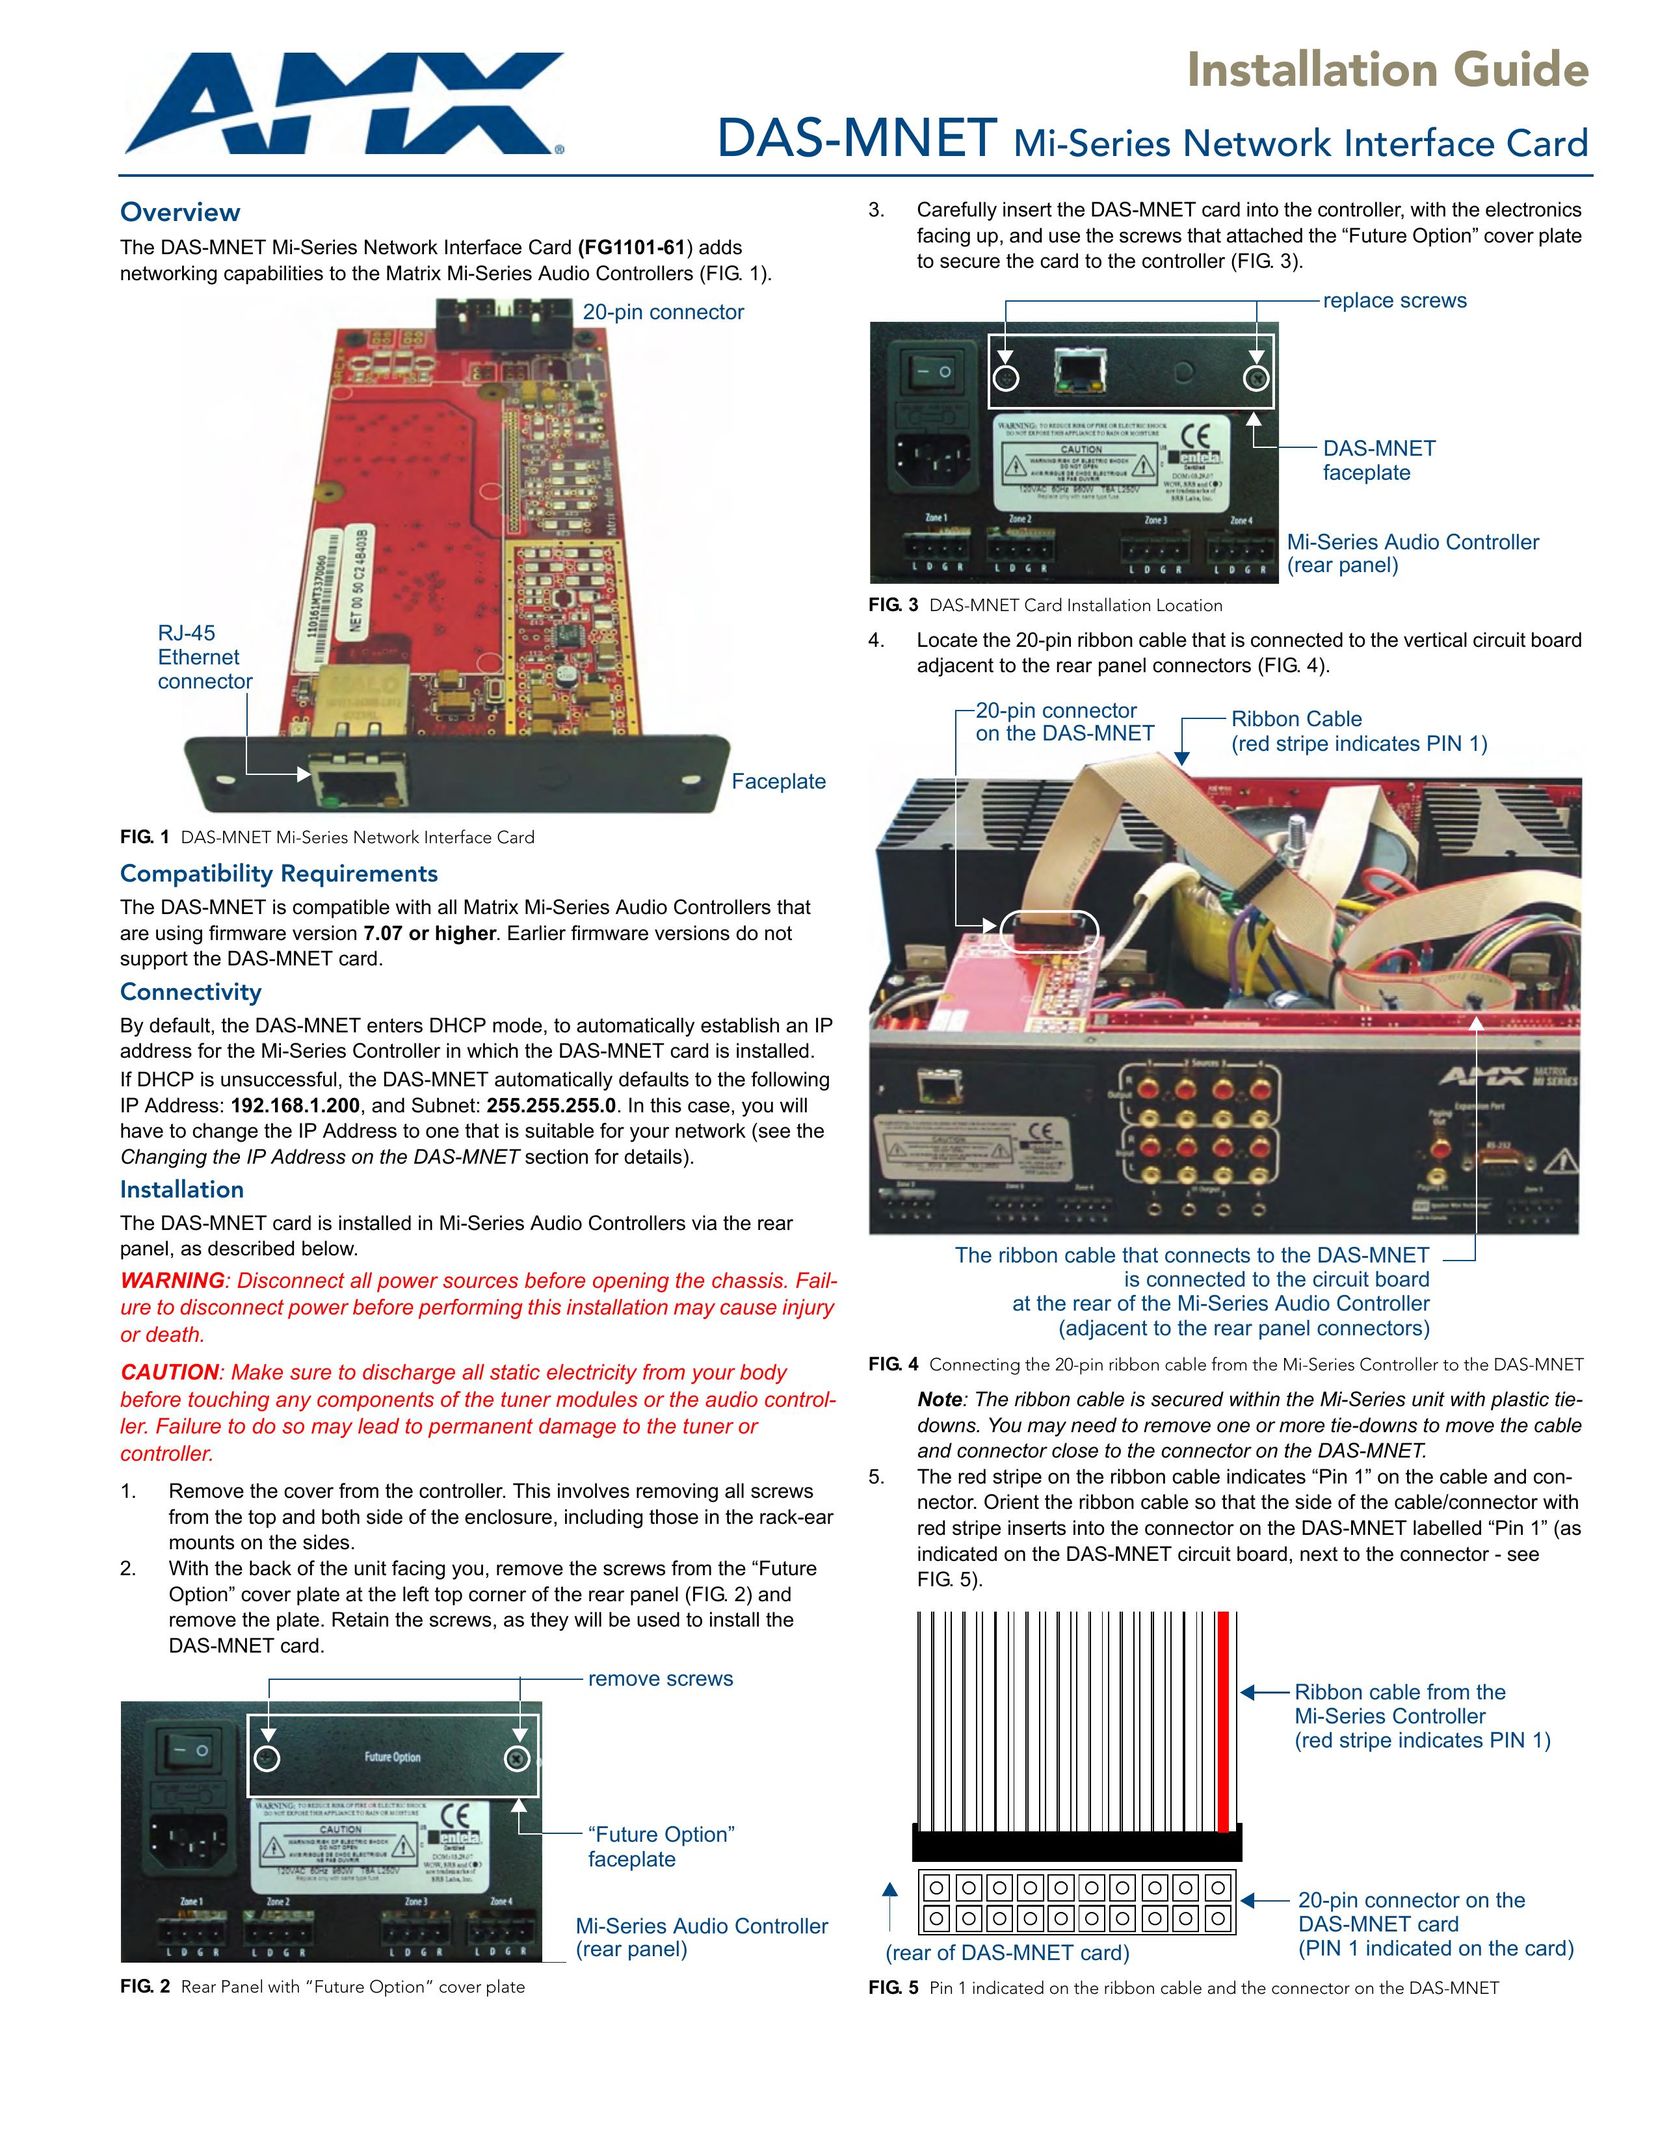 AMX DAS-MNET Network Card User Manual